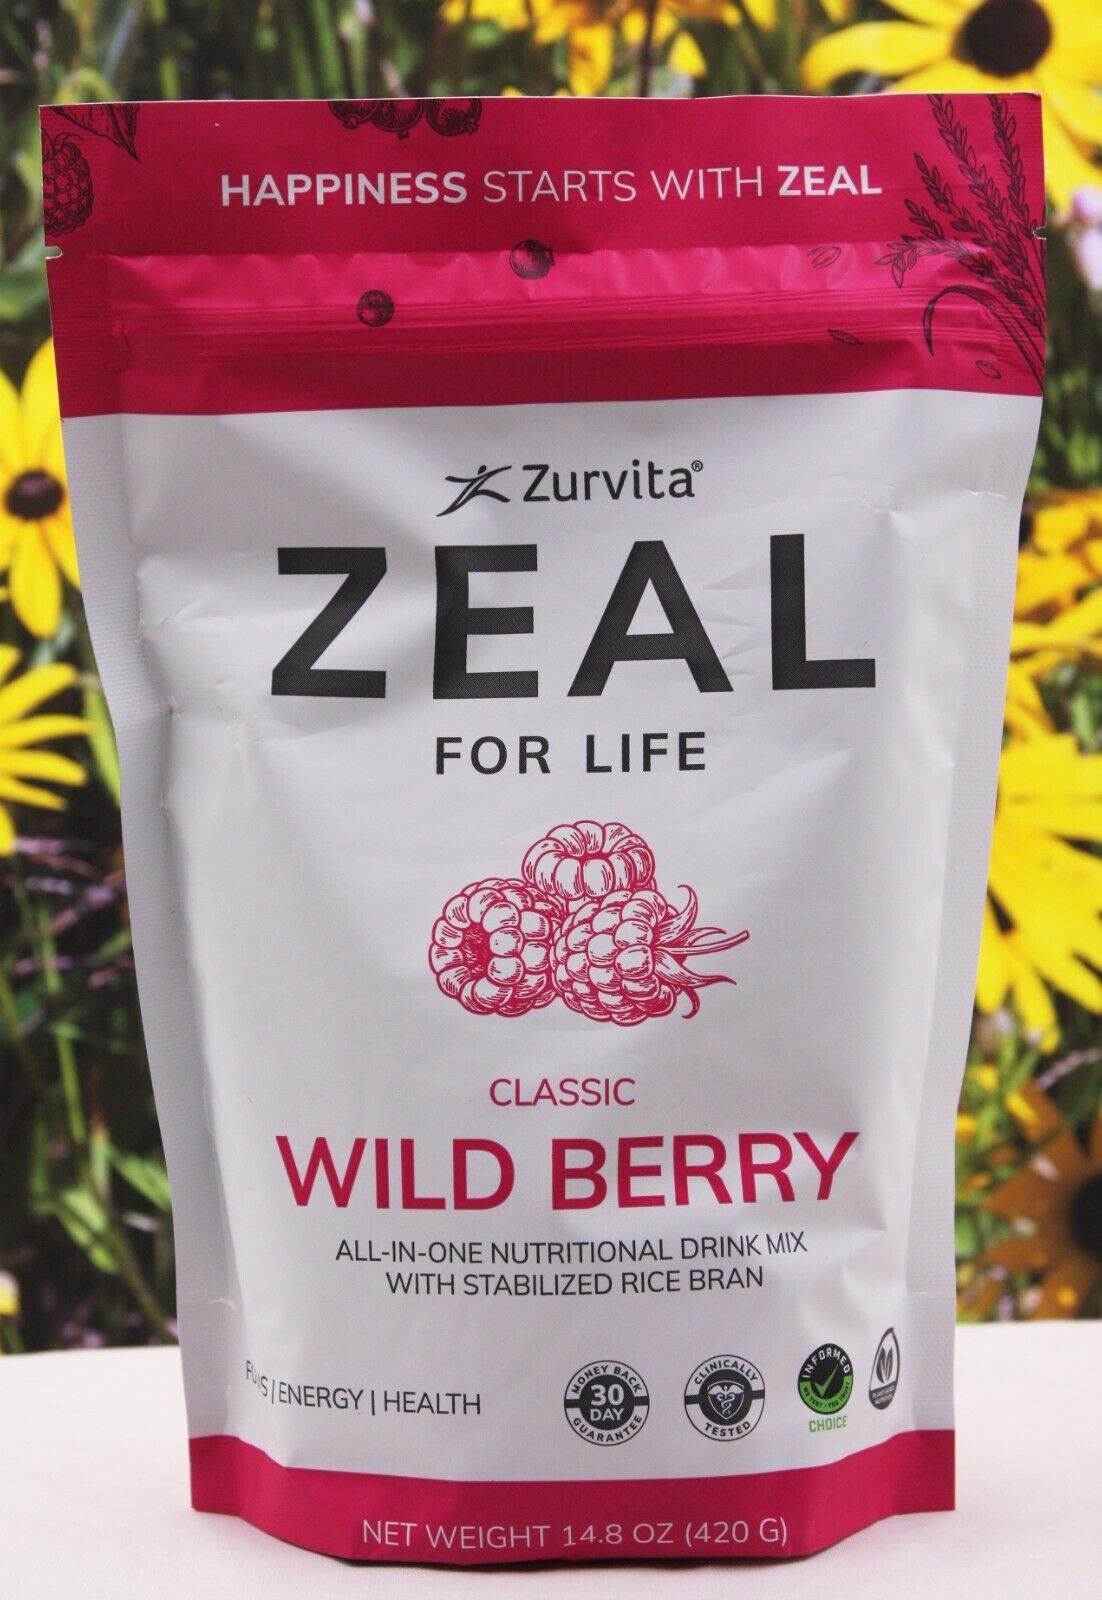 Zurvita Zeal For Life CLASSIC WILD BERRY Bag, 30 Servings - Exp. 9/2025